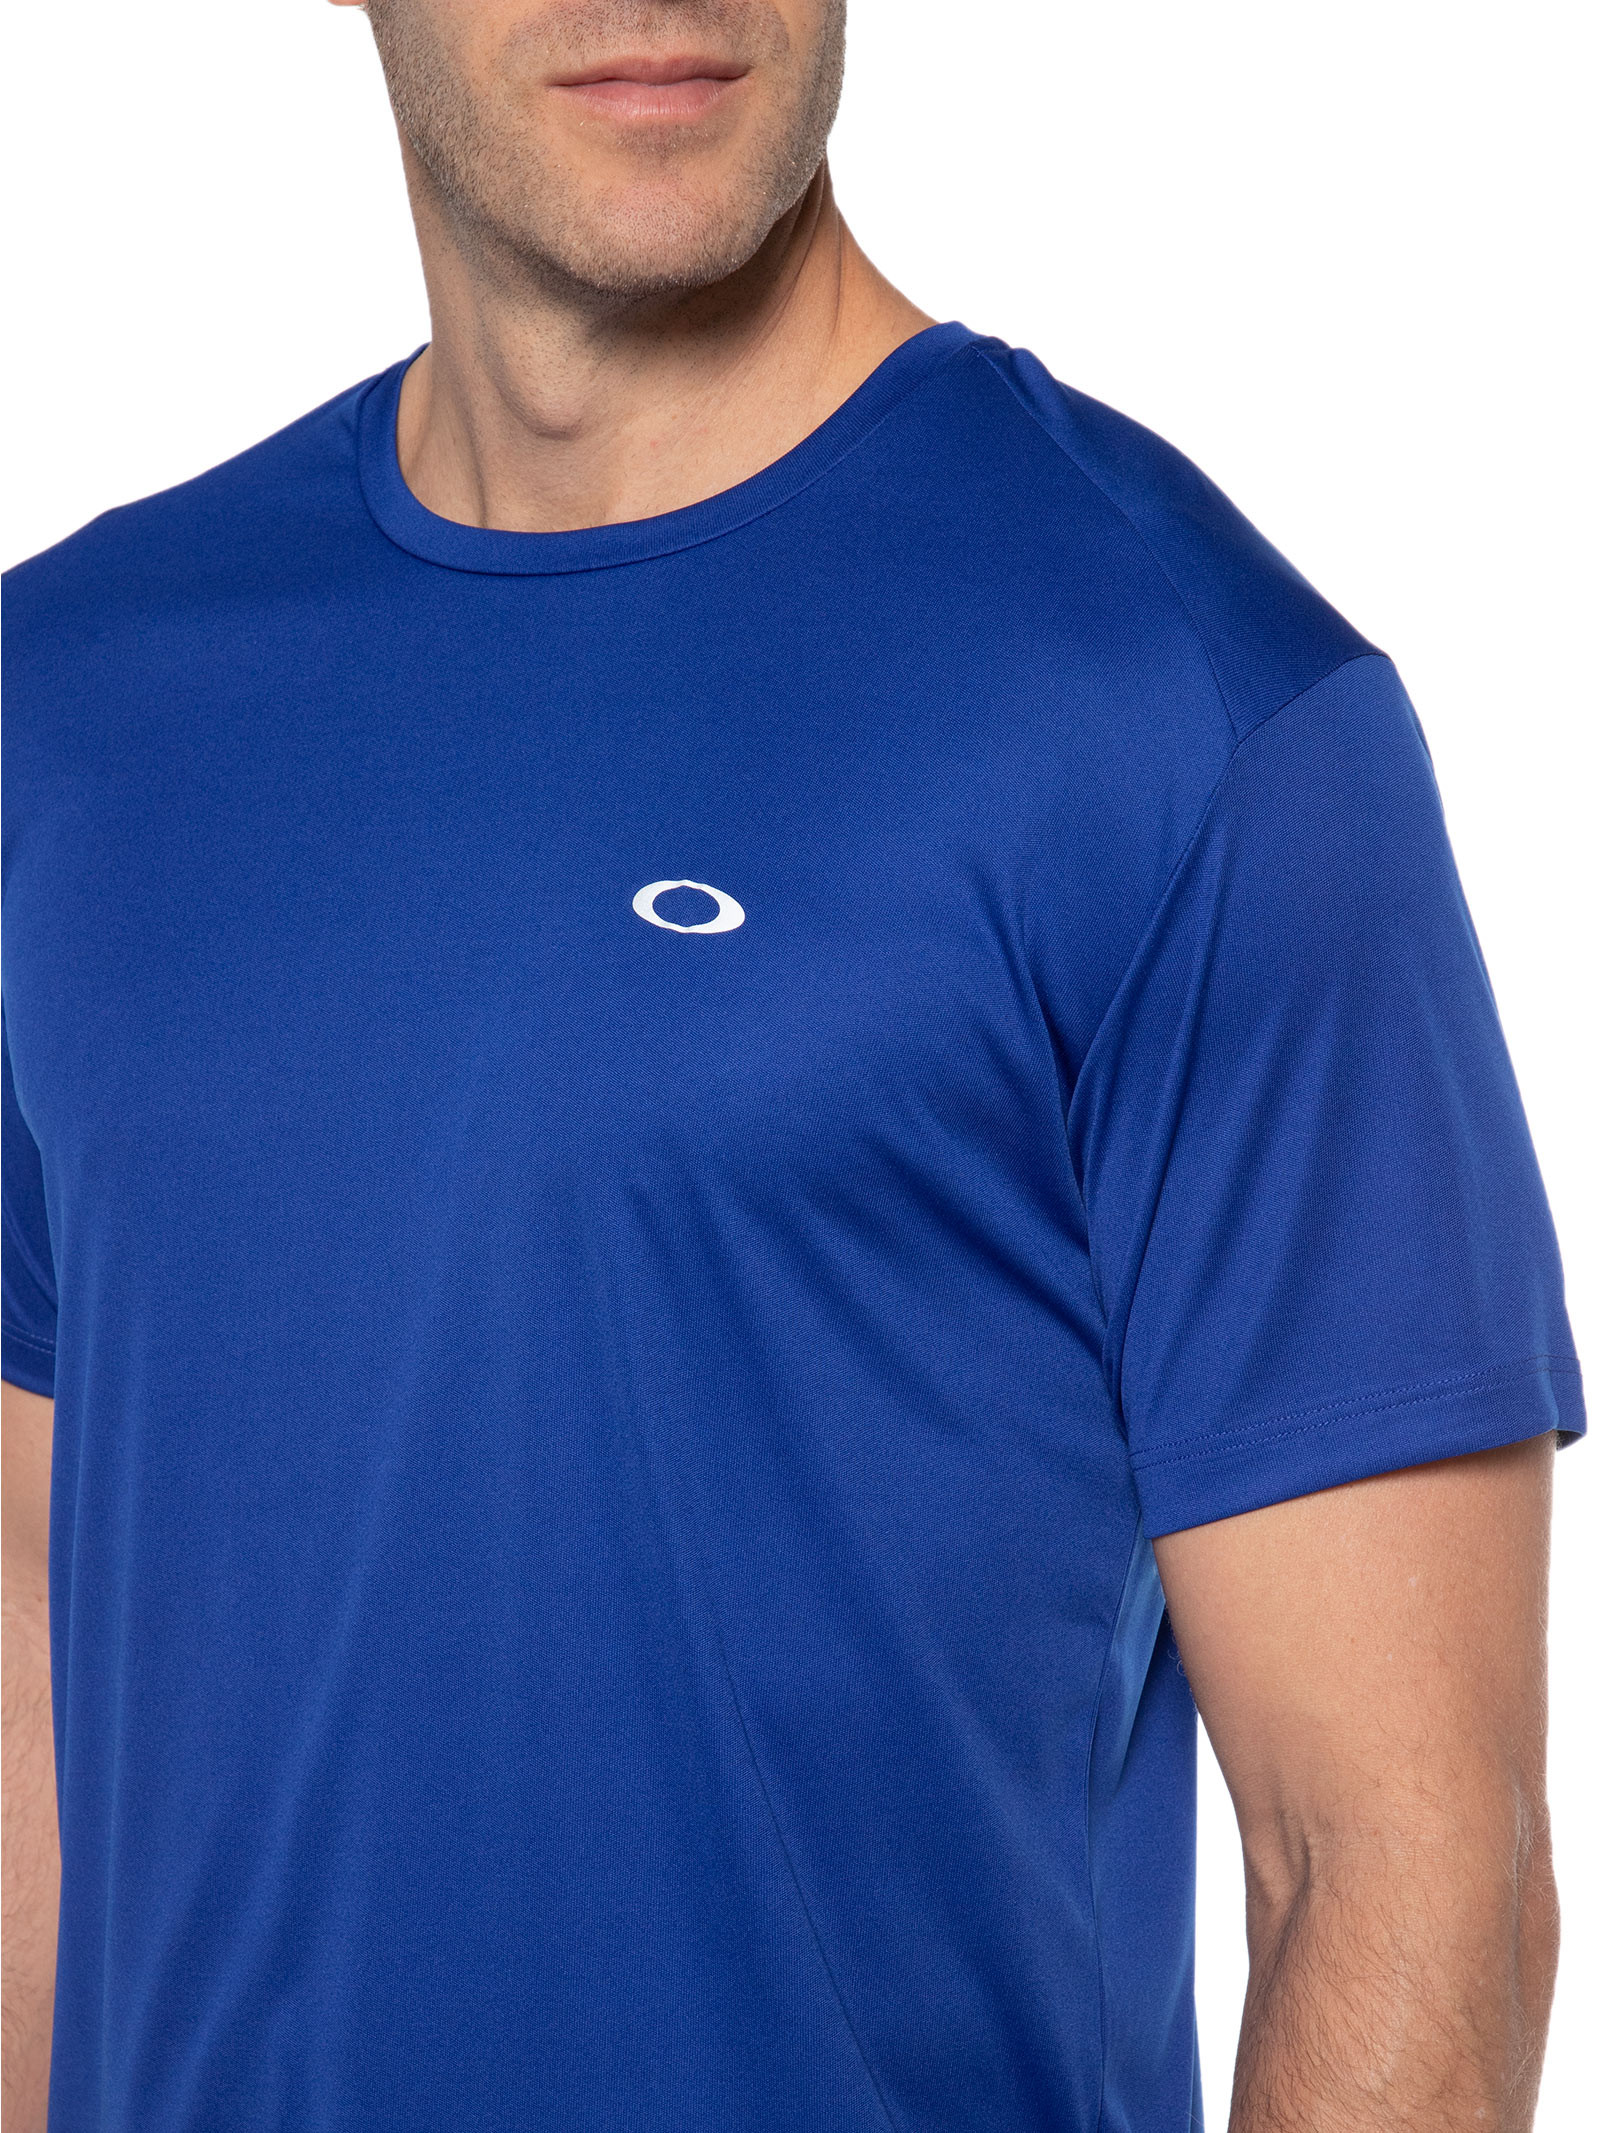 Camiseta Masculina Mod Daily Sport Tee Iii - Oakley - Azul - Oqvestir